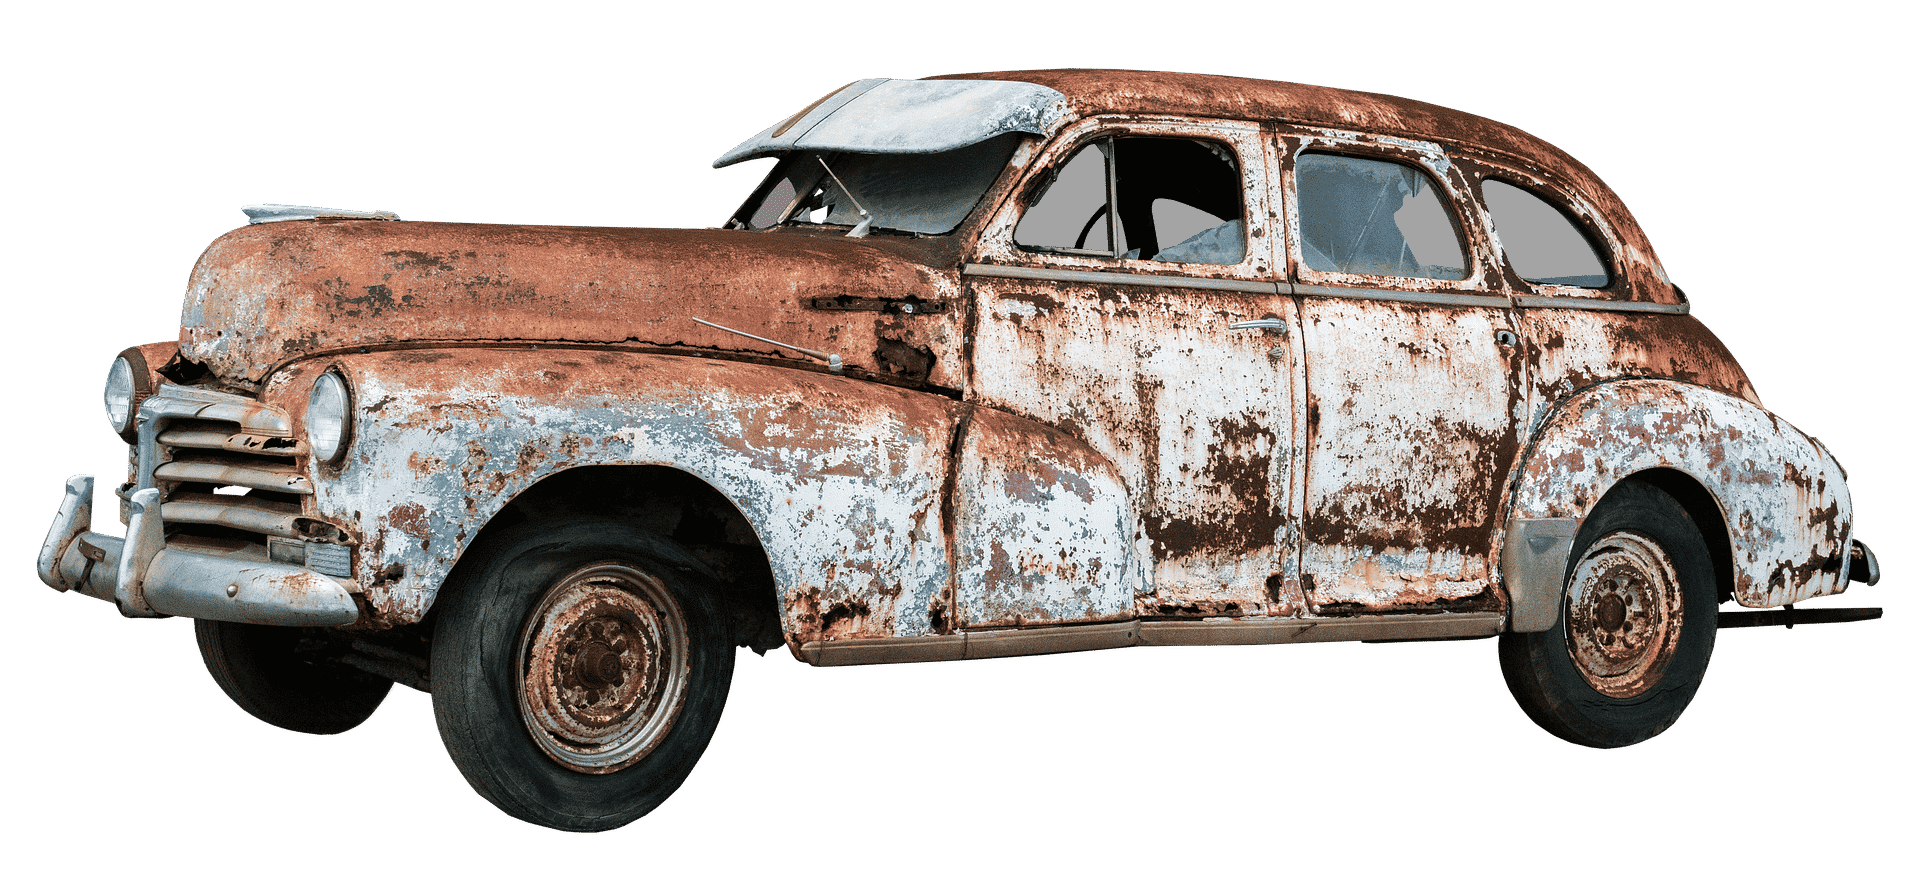 Auto decay rust фото 112